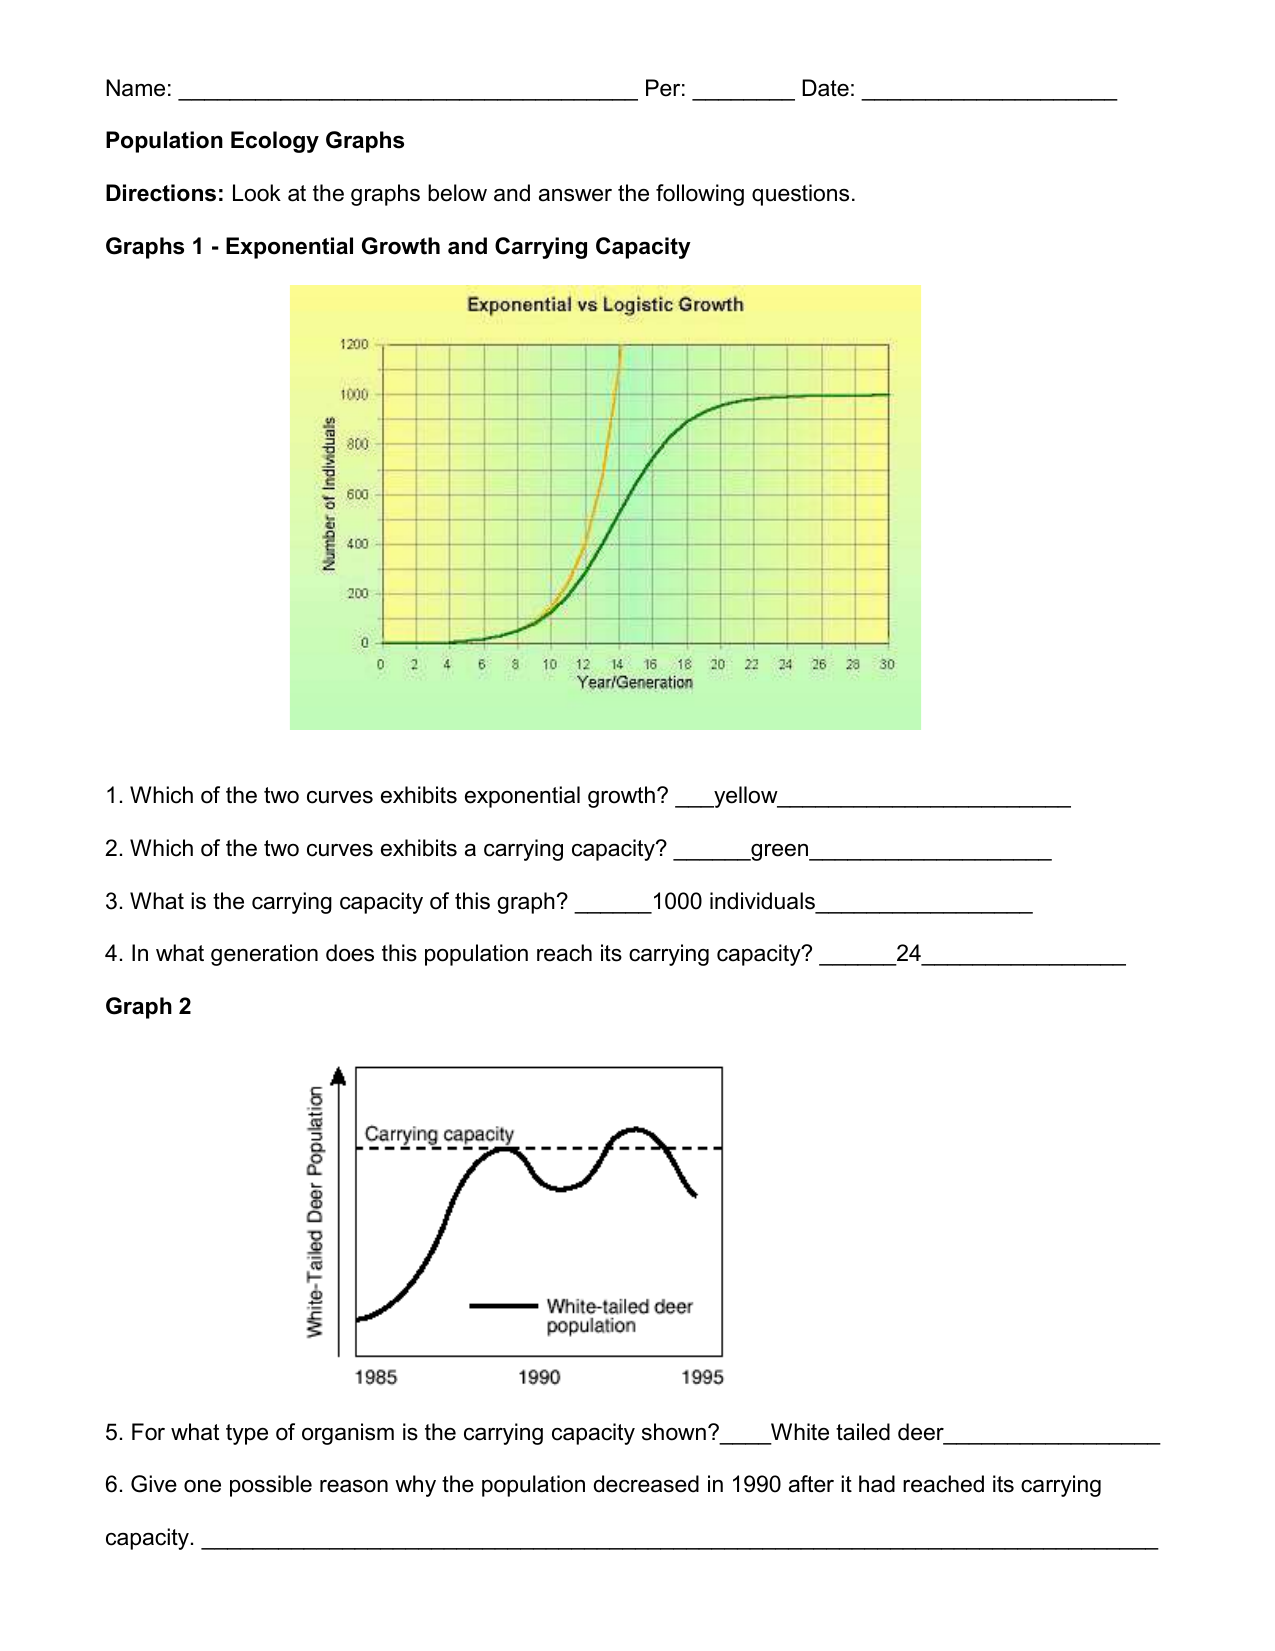 Population Ecology Graph Worksheet Worksheets For Home Learning